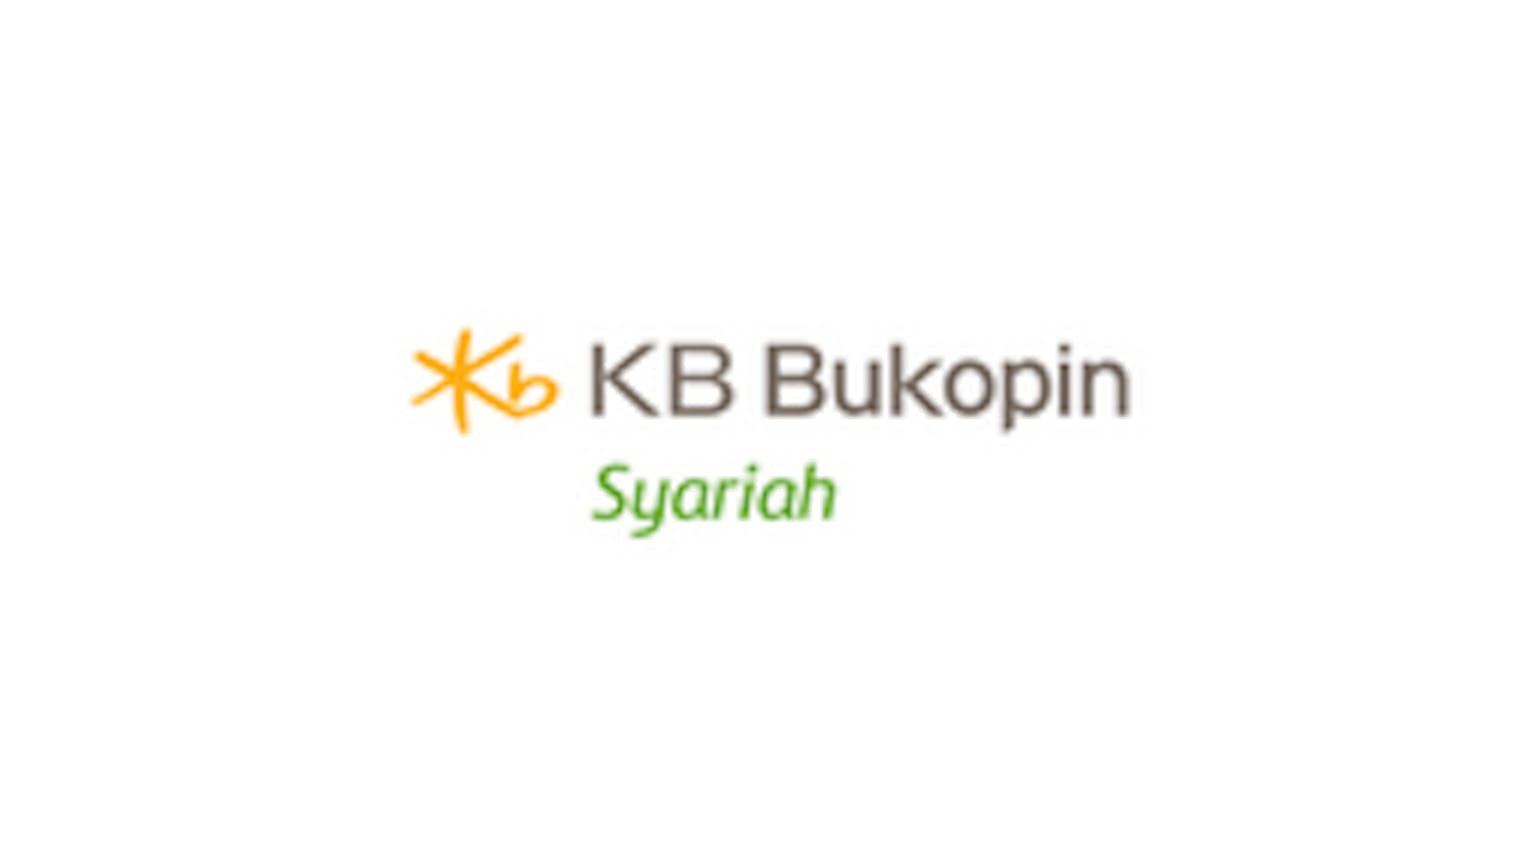 Deposito iB KB Bukopin Syariah